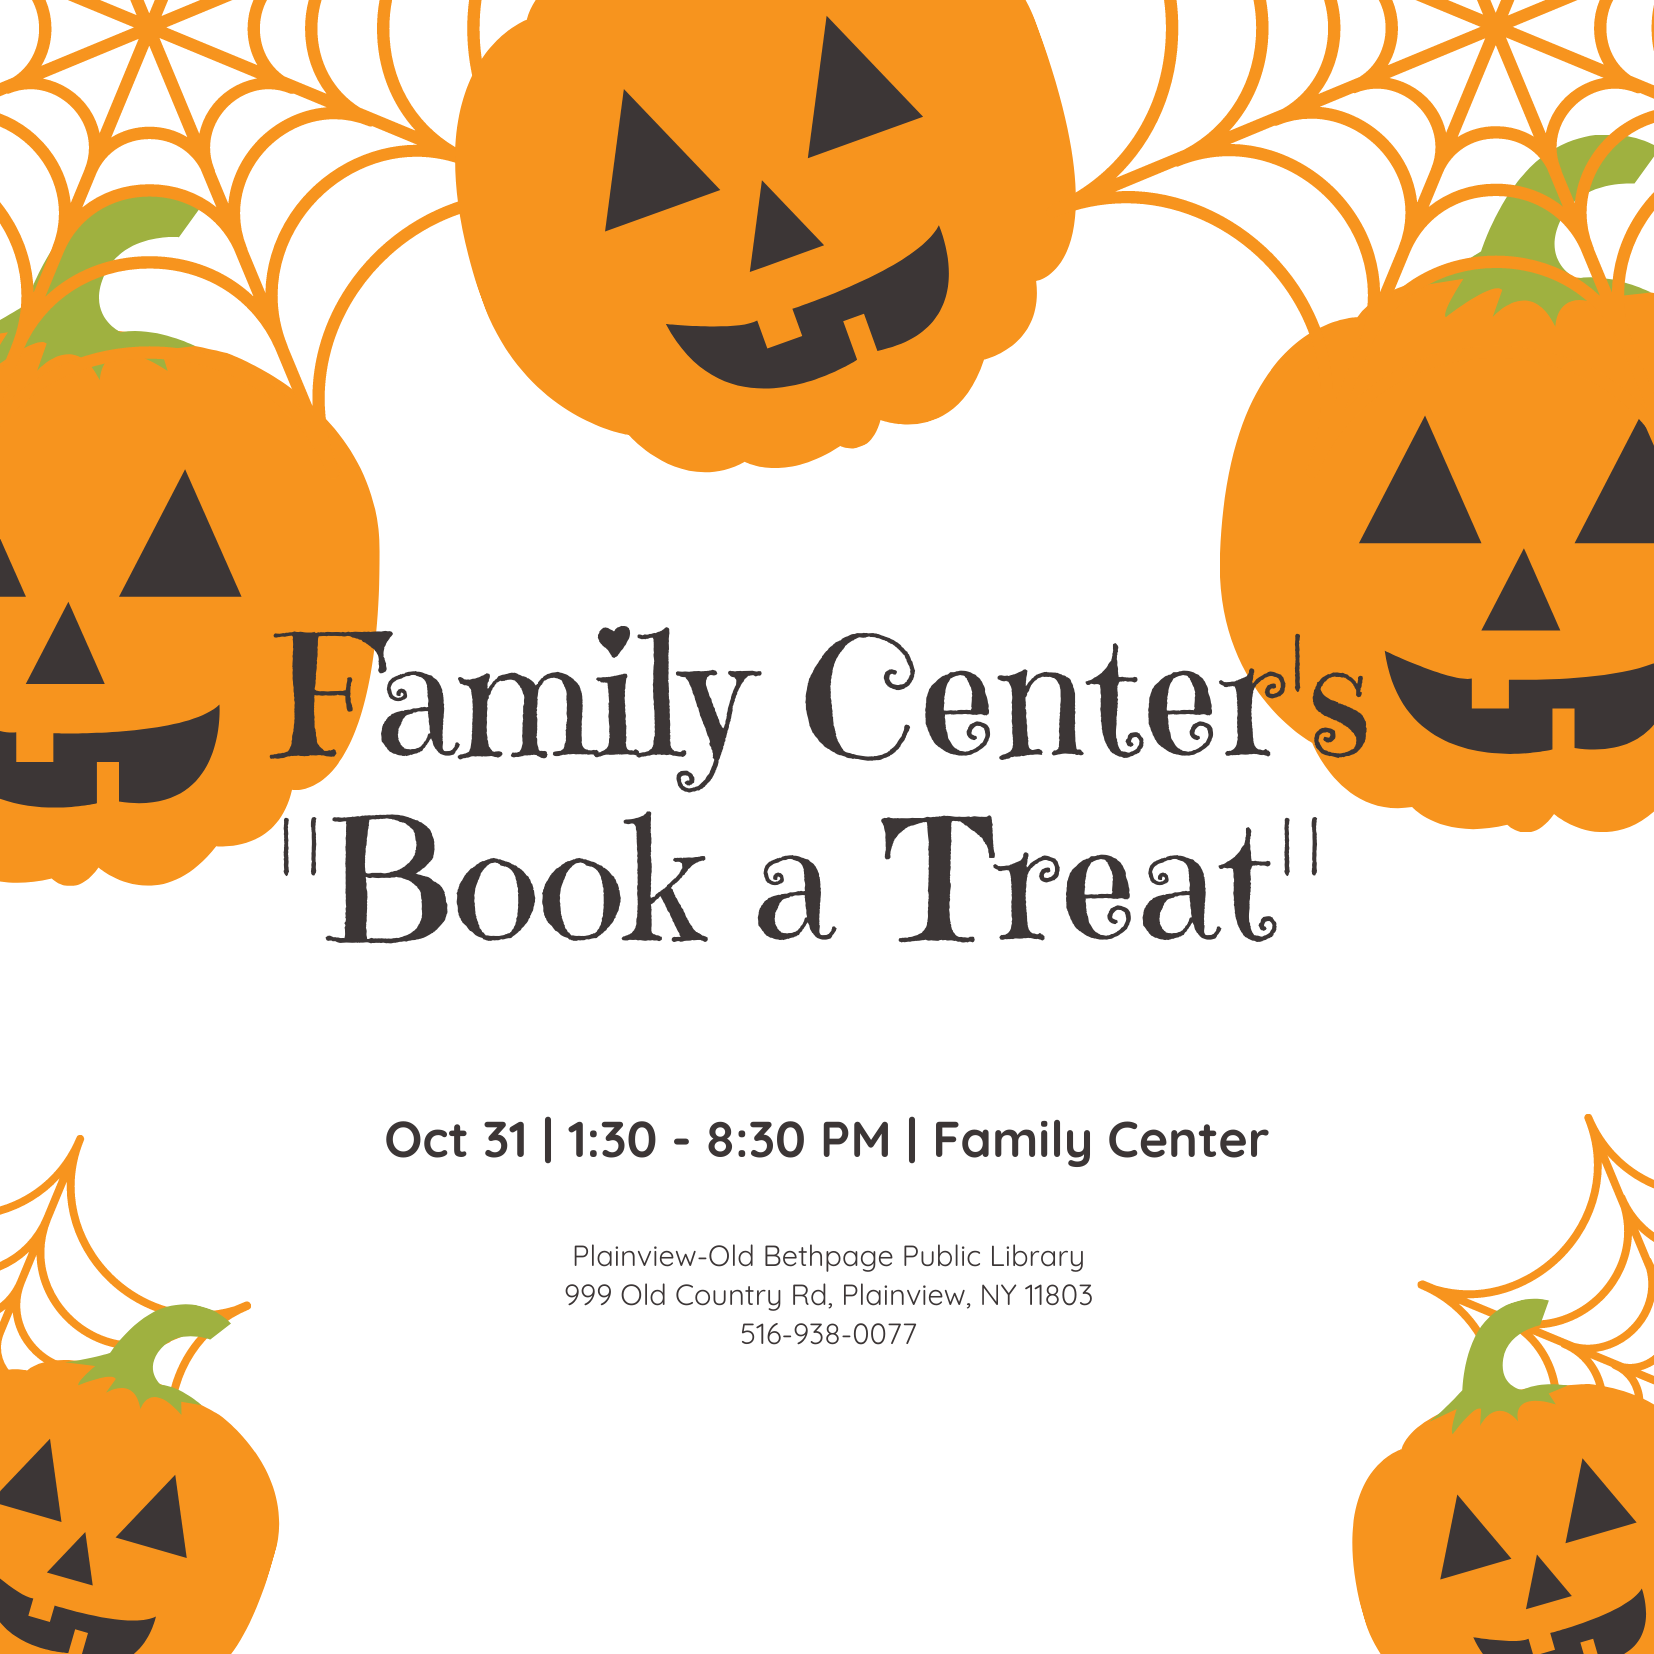 Family Center's "Book a Treat"